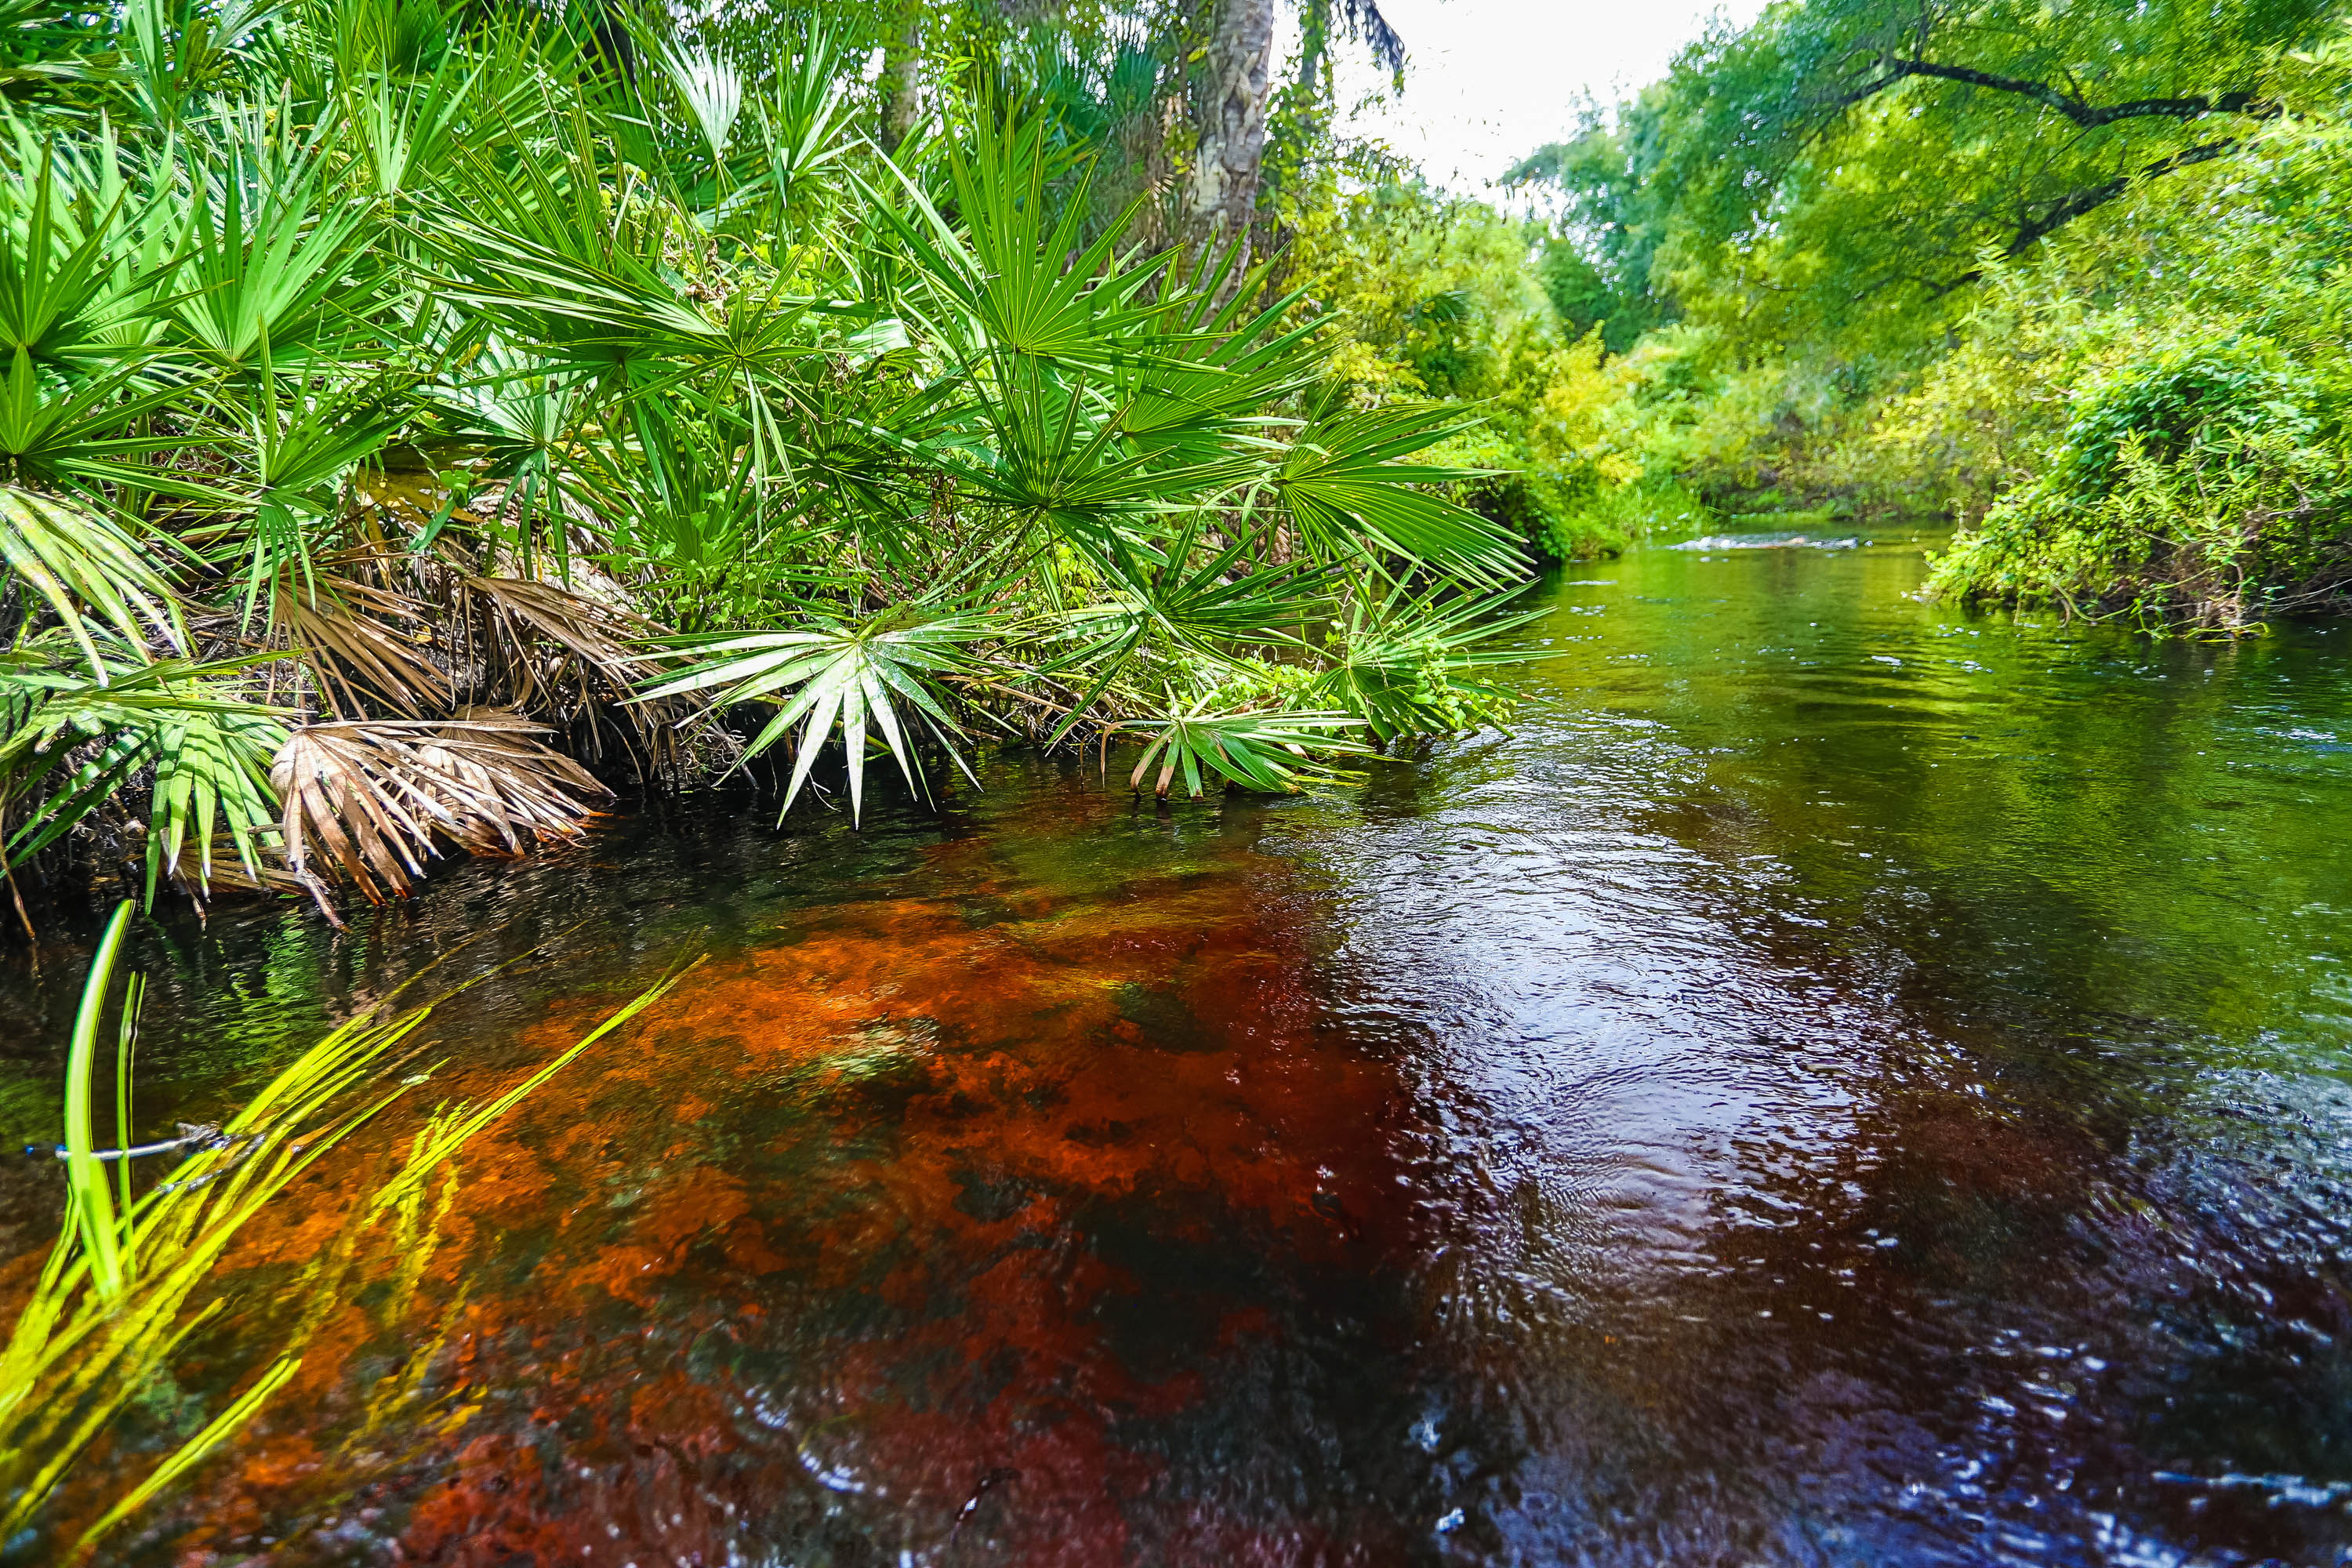 The blackwater stream flowing through vegetation at Tiger Creek Preserve.